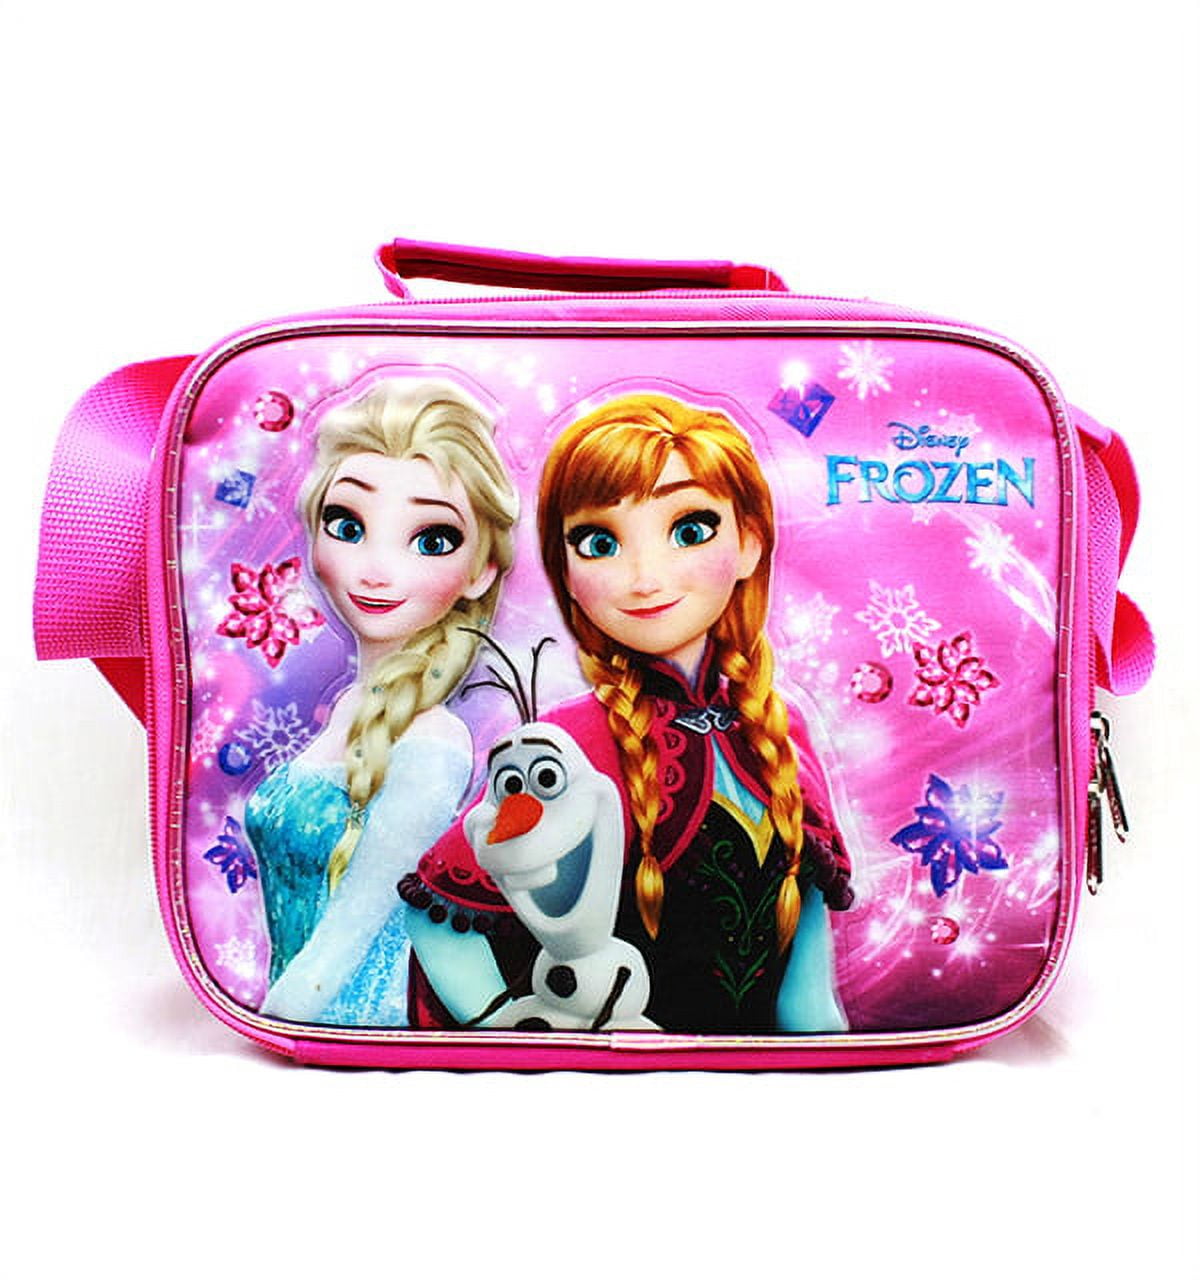 Lunch Bag Disney Frozen Elsa Olaf Anna Pink New A07972PK 65162db6 182c 41c1 904c bb8f6a334c4c.4c1d920aeb6aa17e3a8d955f6f6ec440